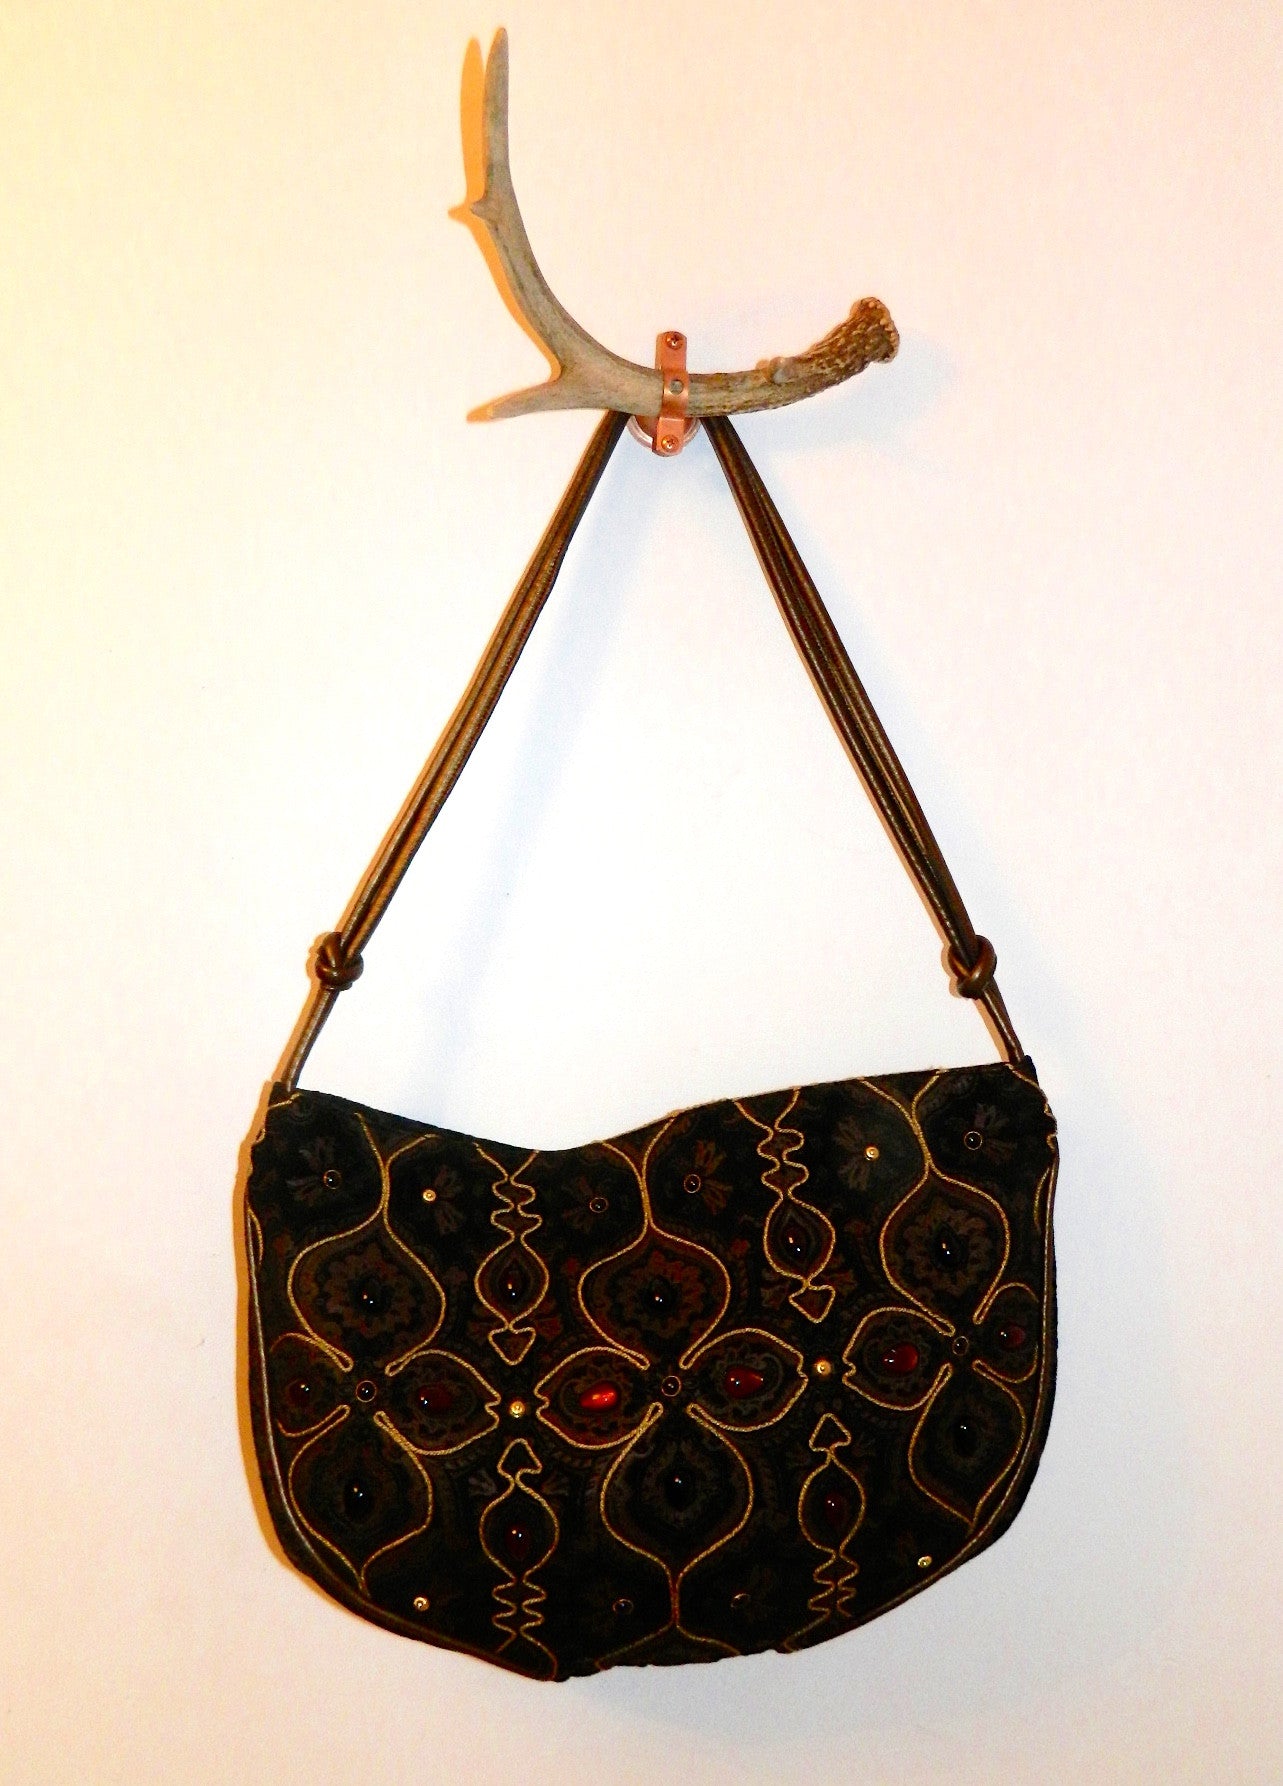 vintage 1980s black suede bag Braccialini / Baroque slouchy shoulder purse